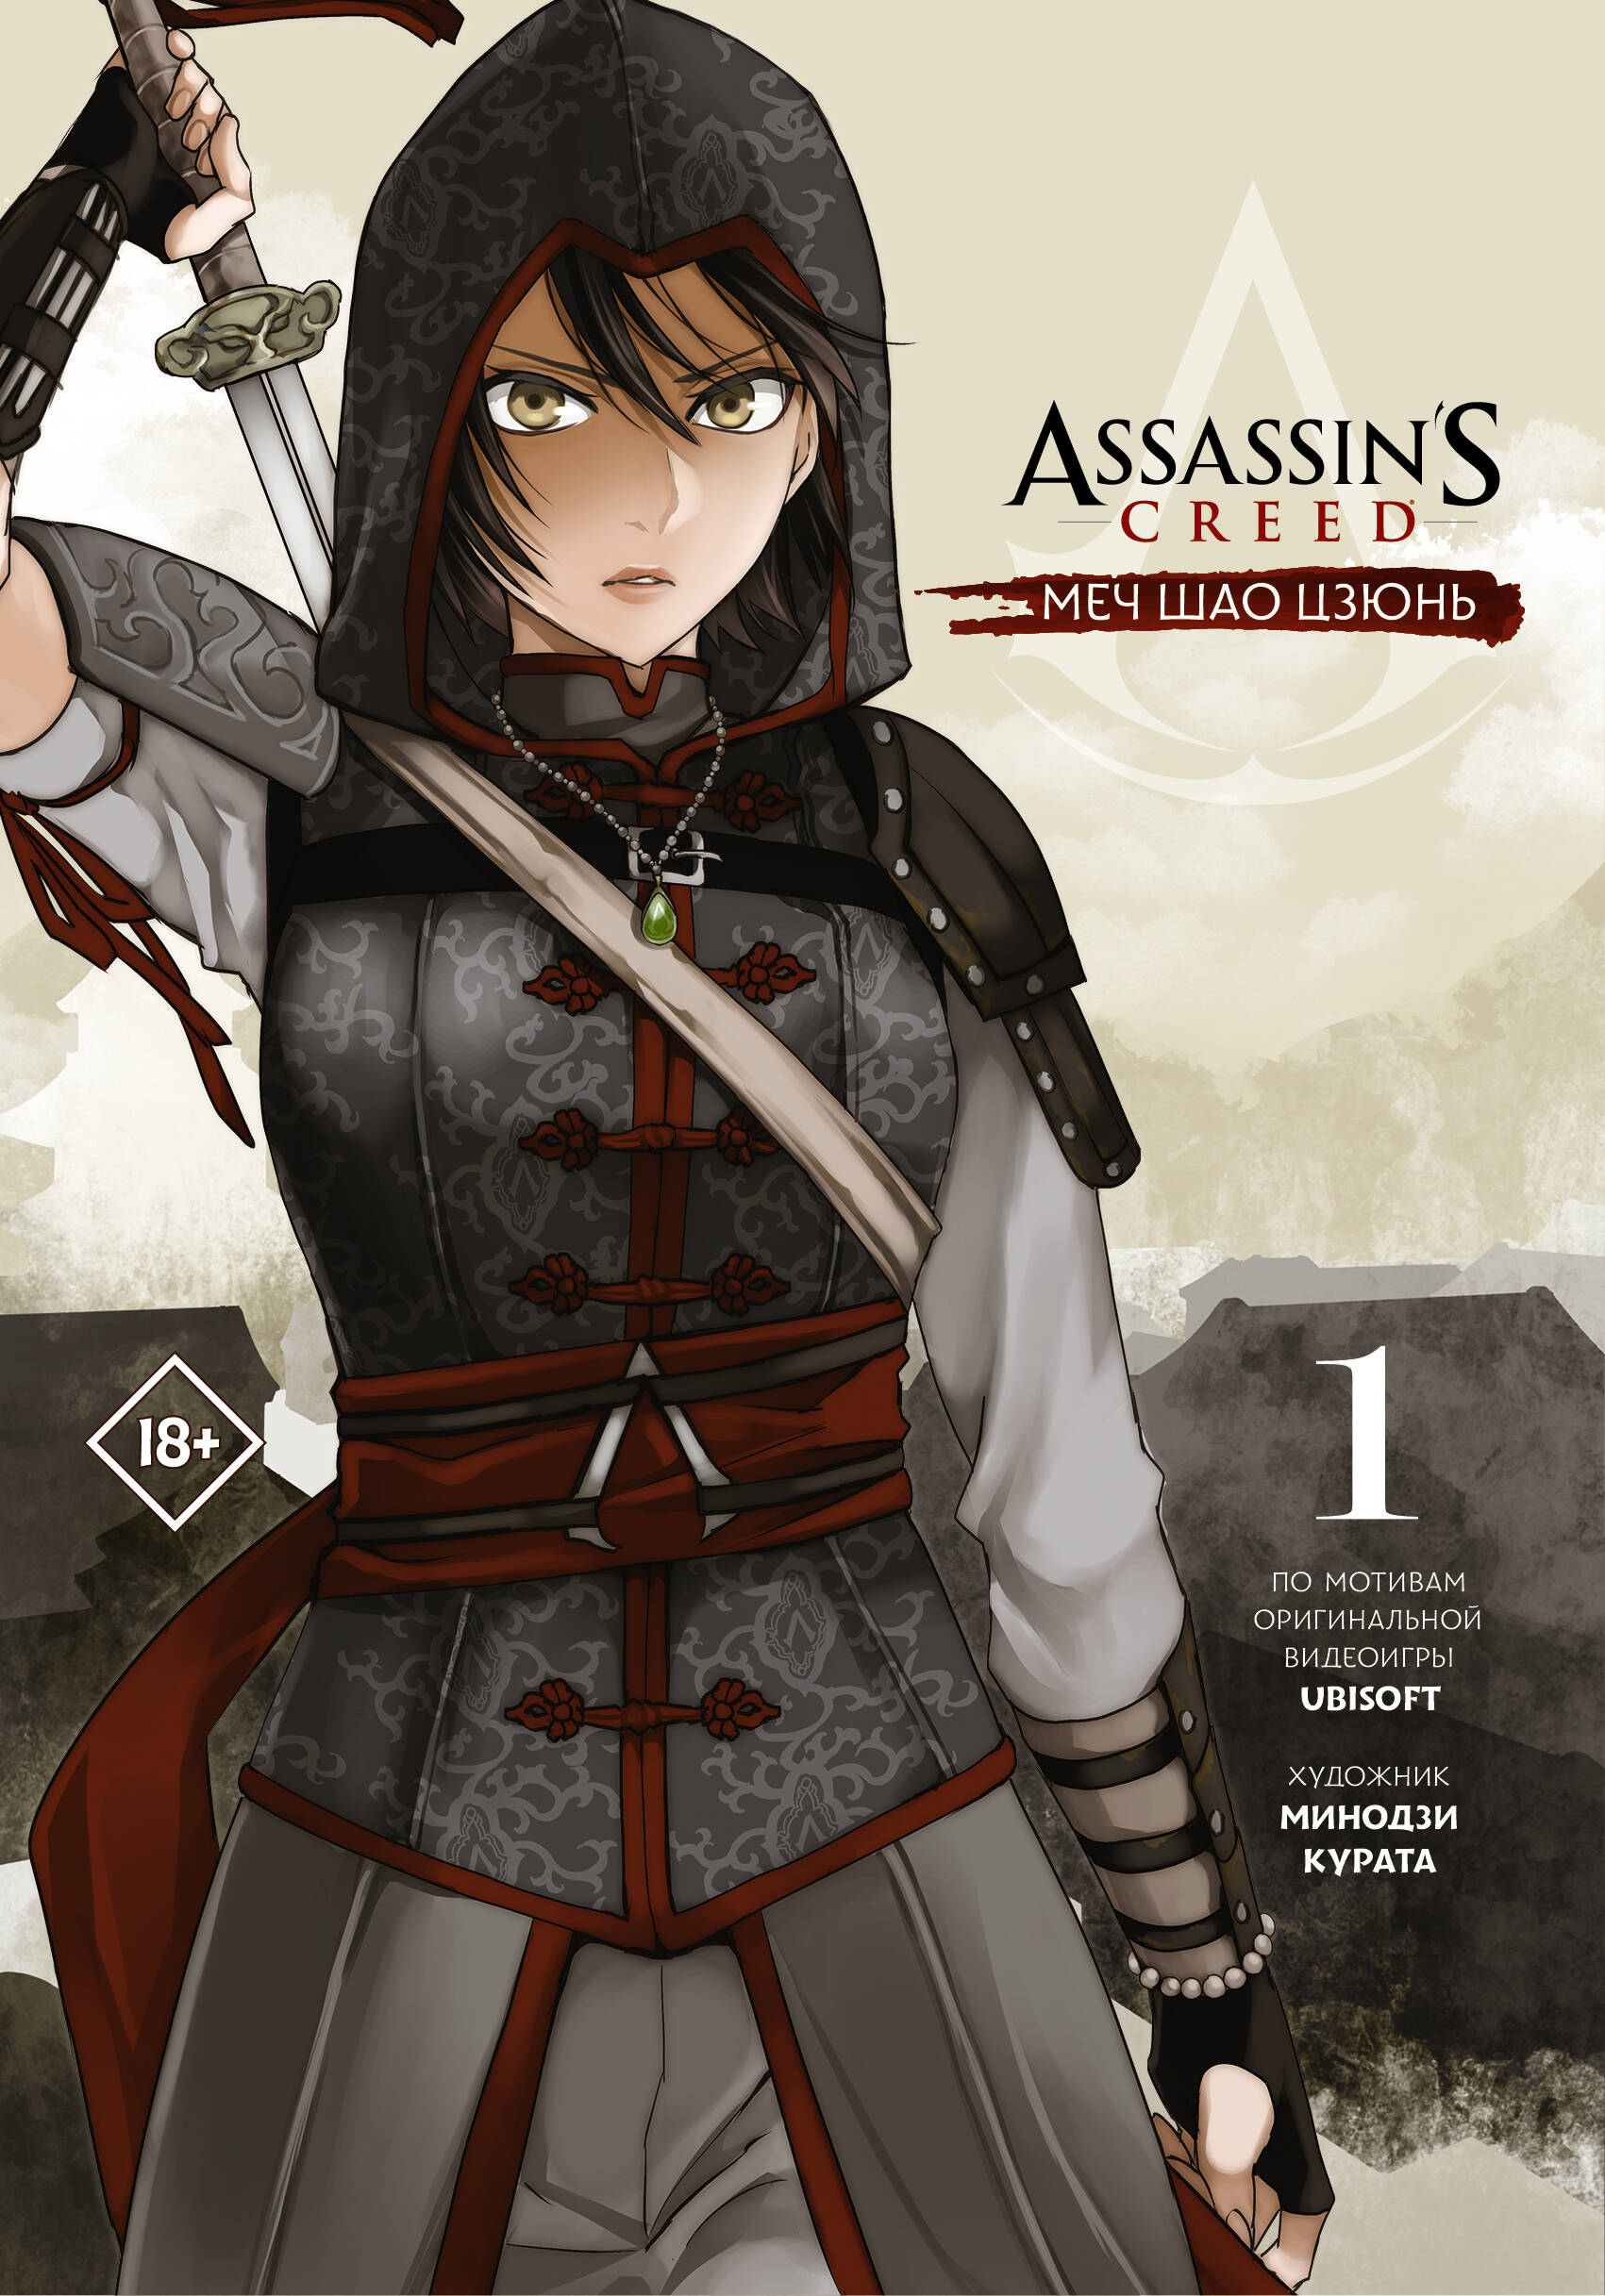 курата минодзи assassins creed меч шао цзюнь том 1 Курата Минодзи Assassins Creed: Меч Шао Цзюнь. Том 1